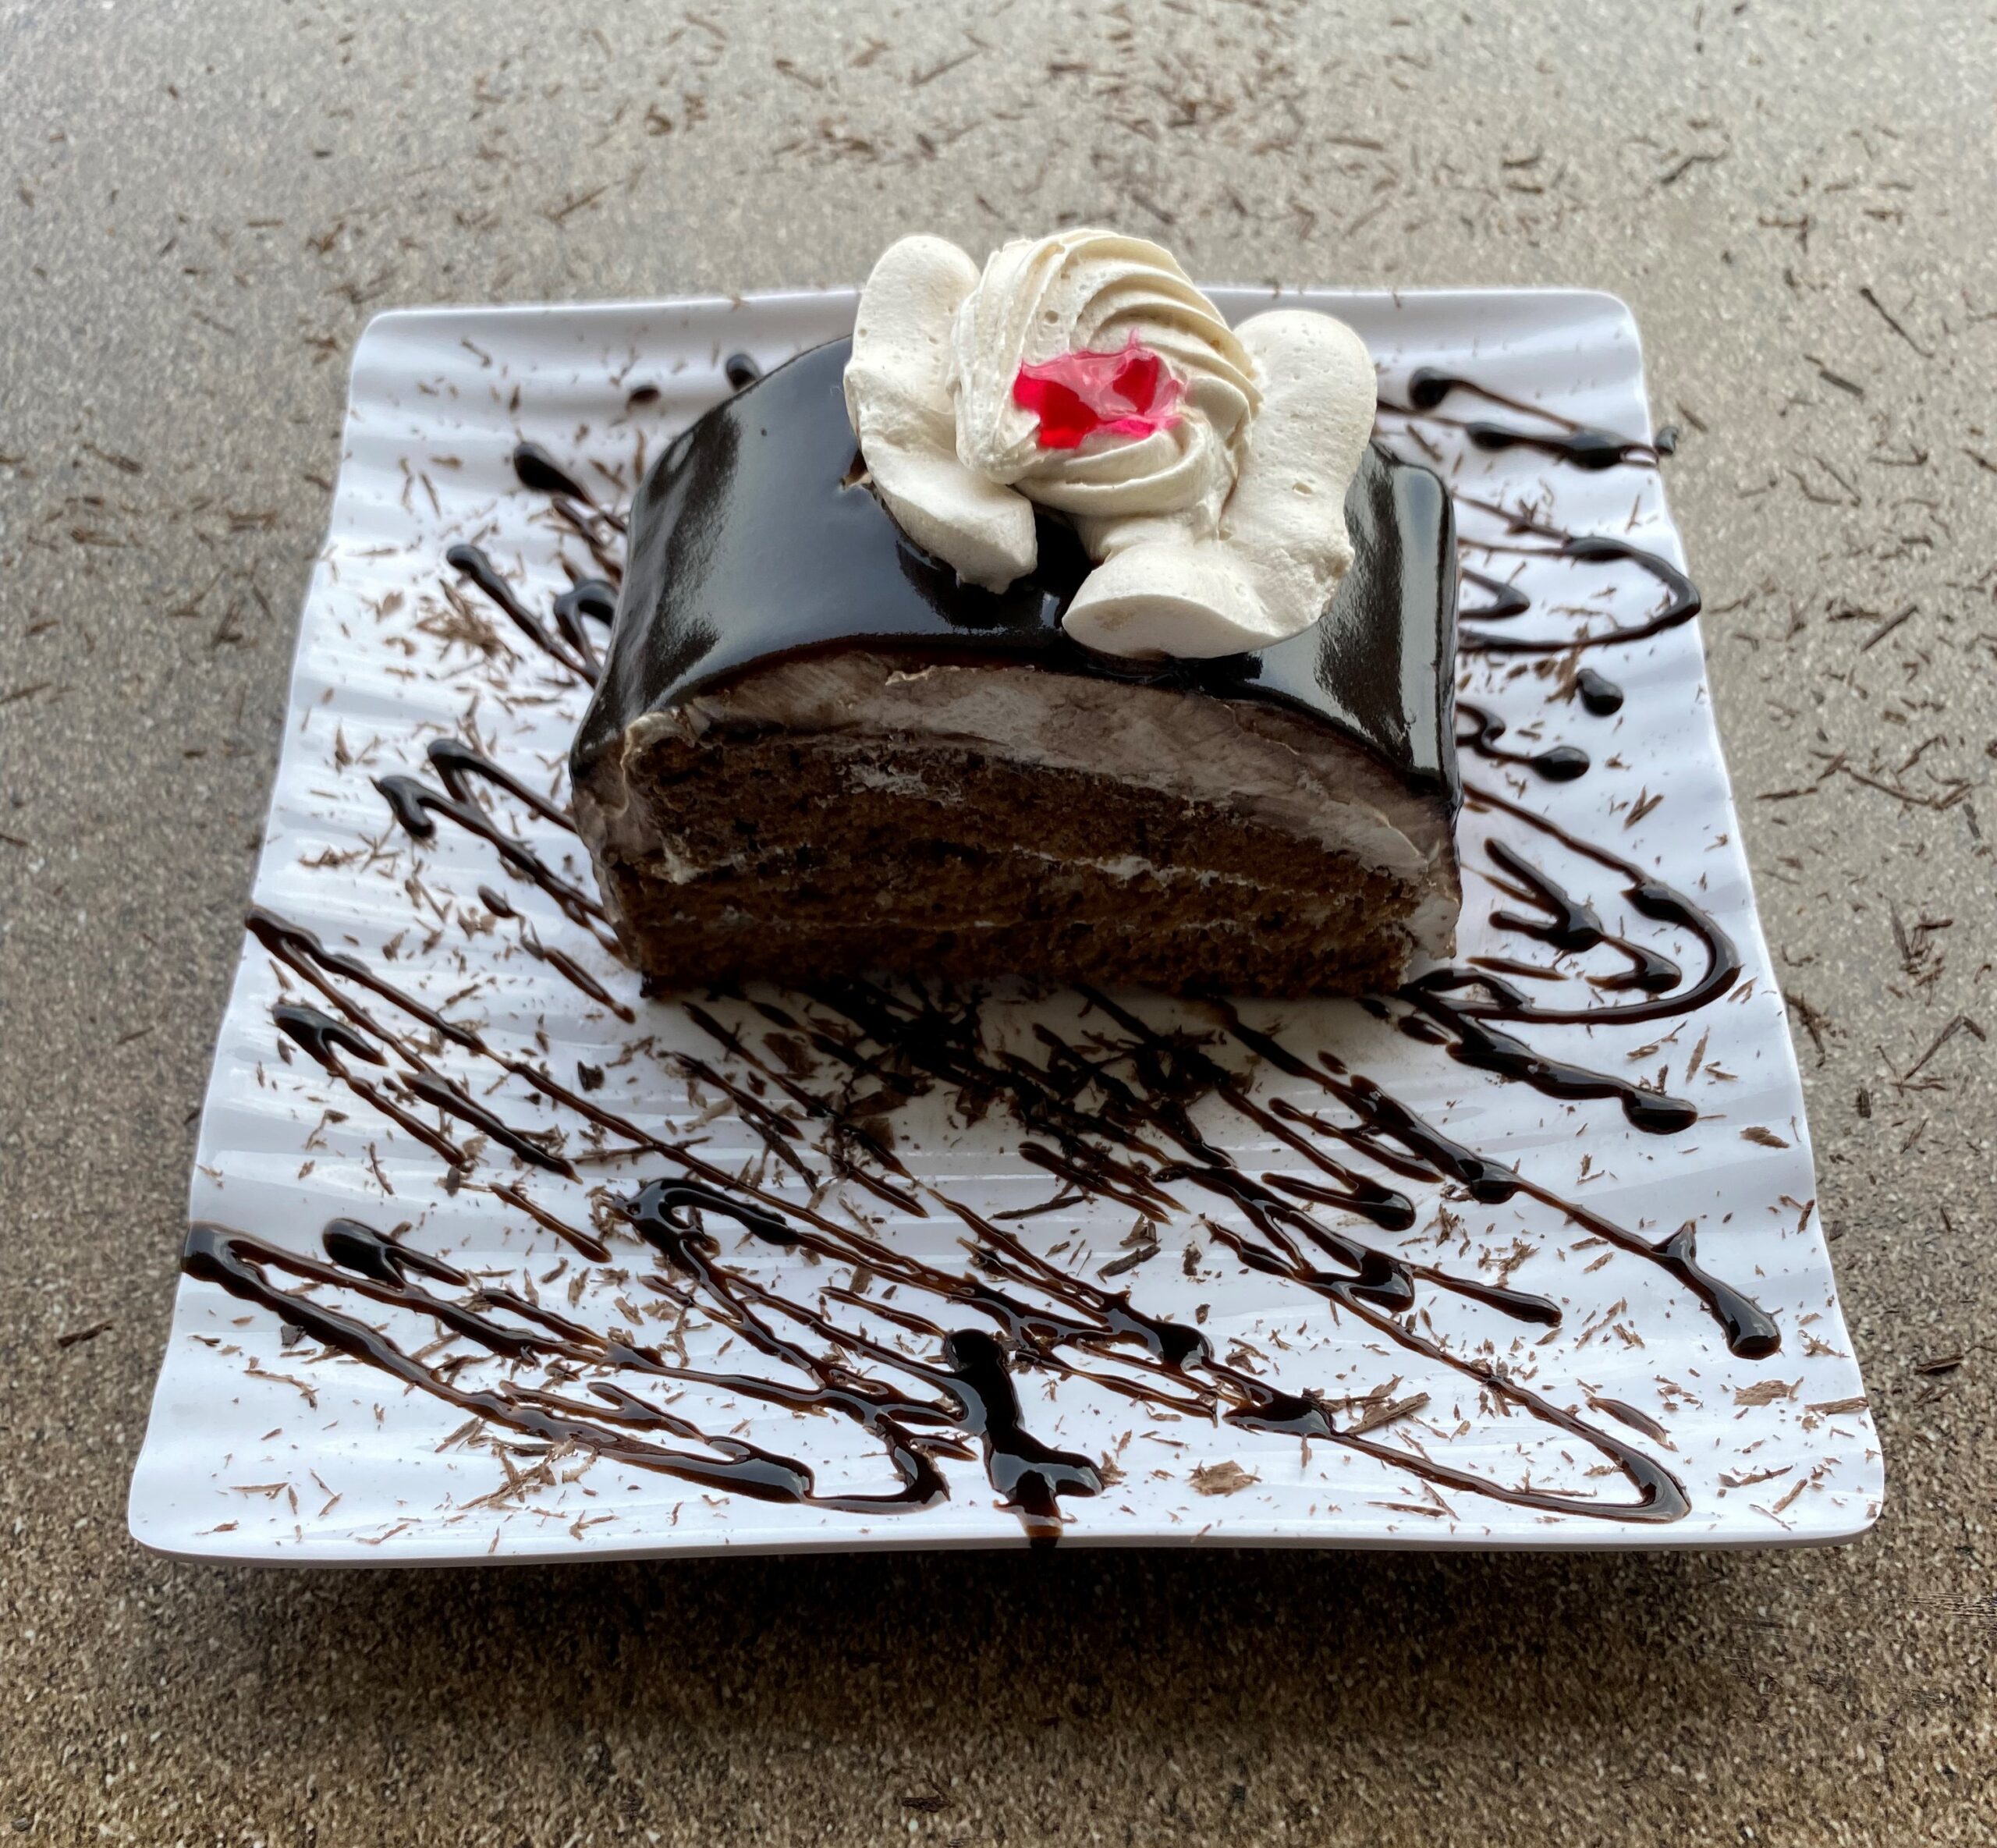 HD wallpaper: Food, Dessert, Cake, Chocolate, Pastry | Wallpaper Flare